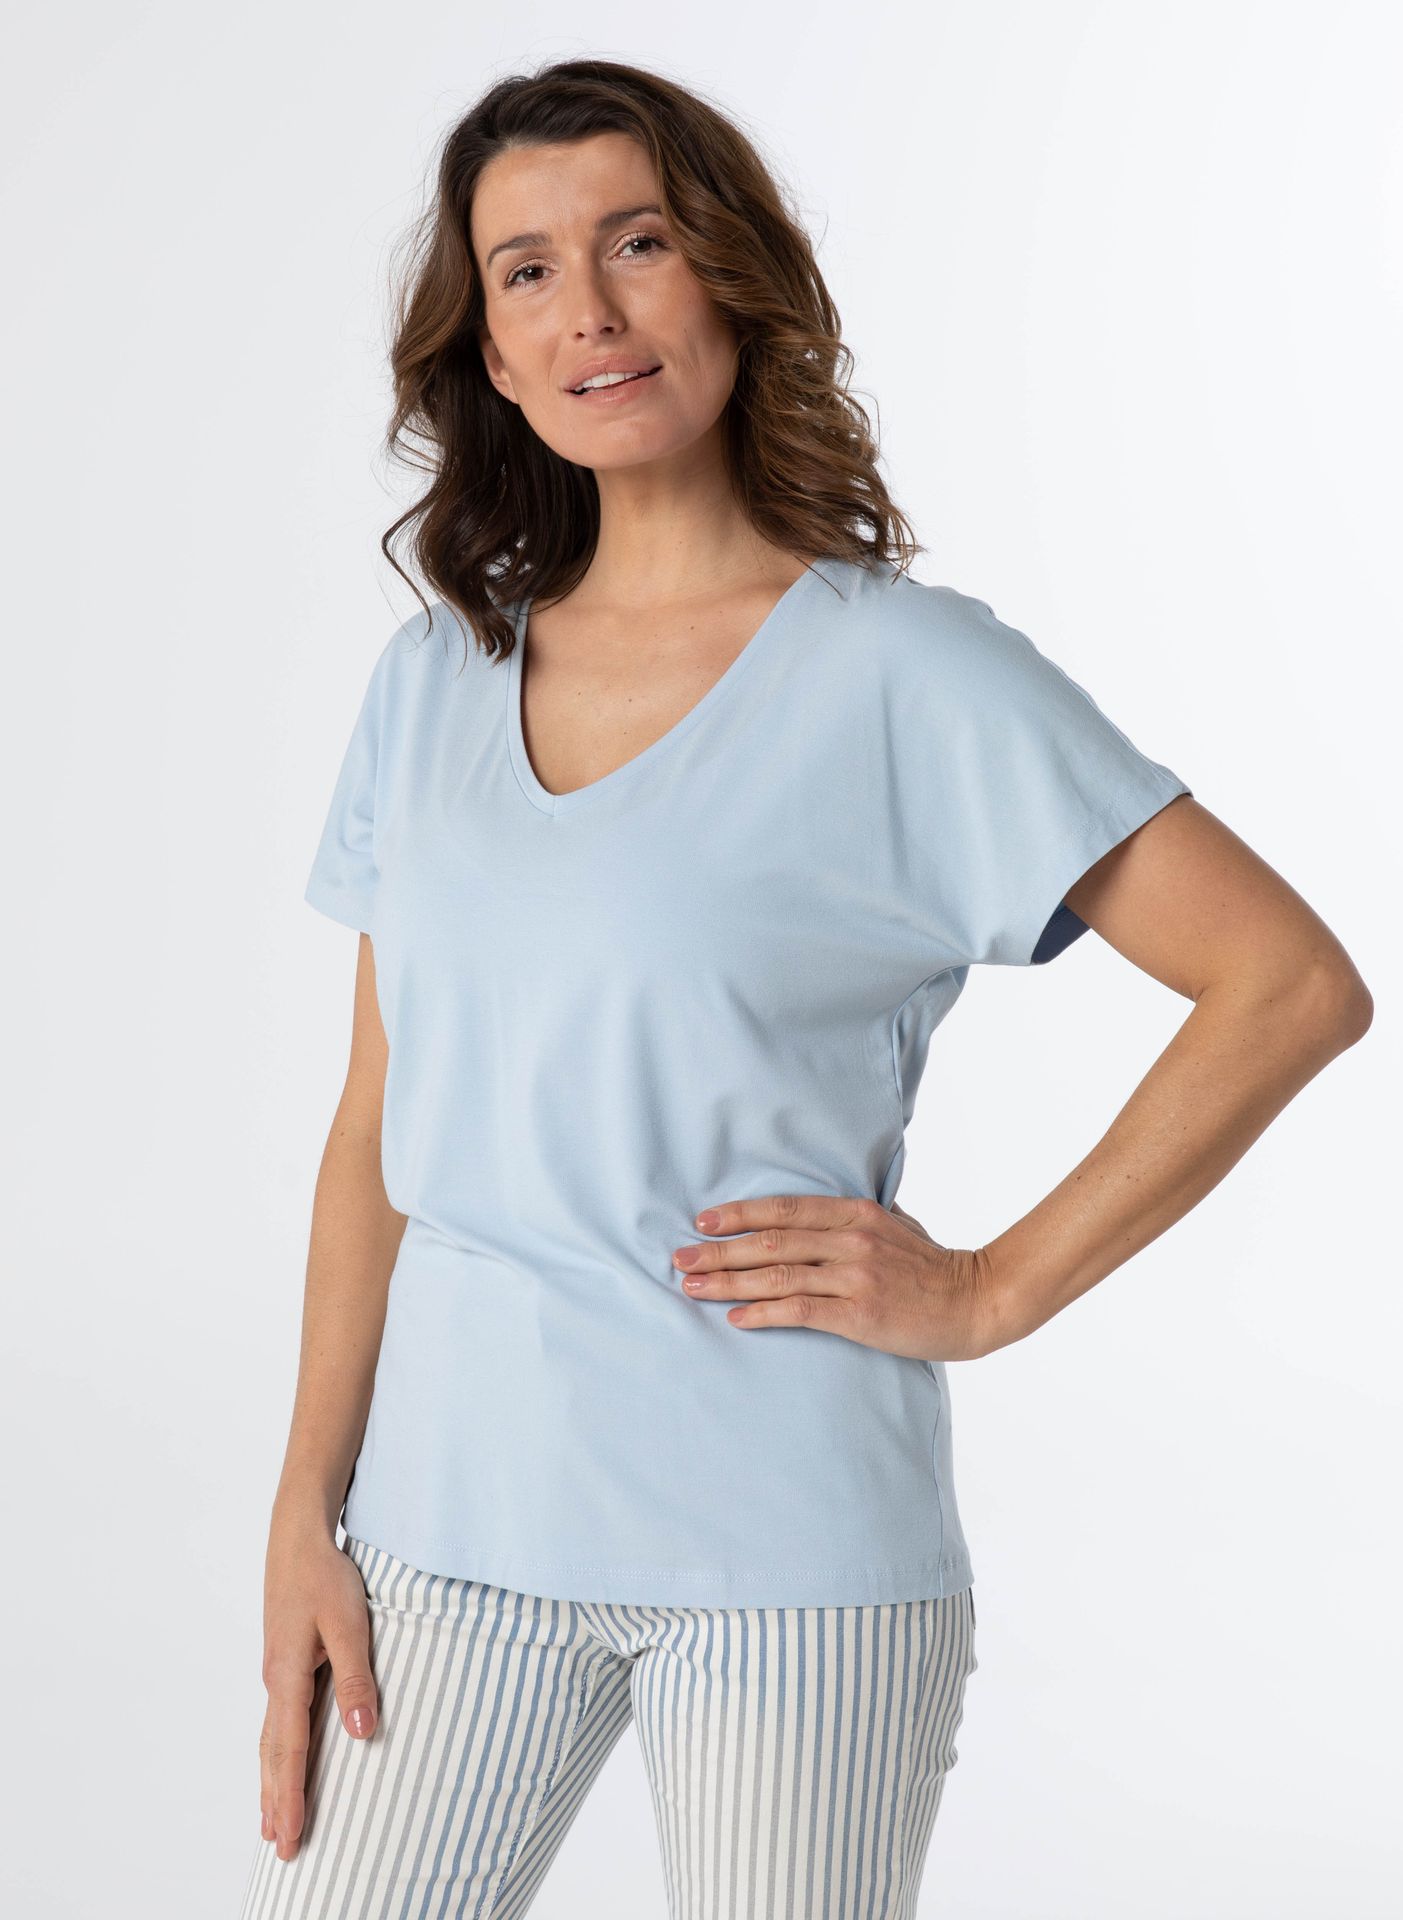 Norah Shirt Maral lichtblauw light blue 208968-401